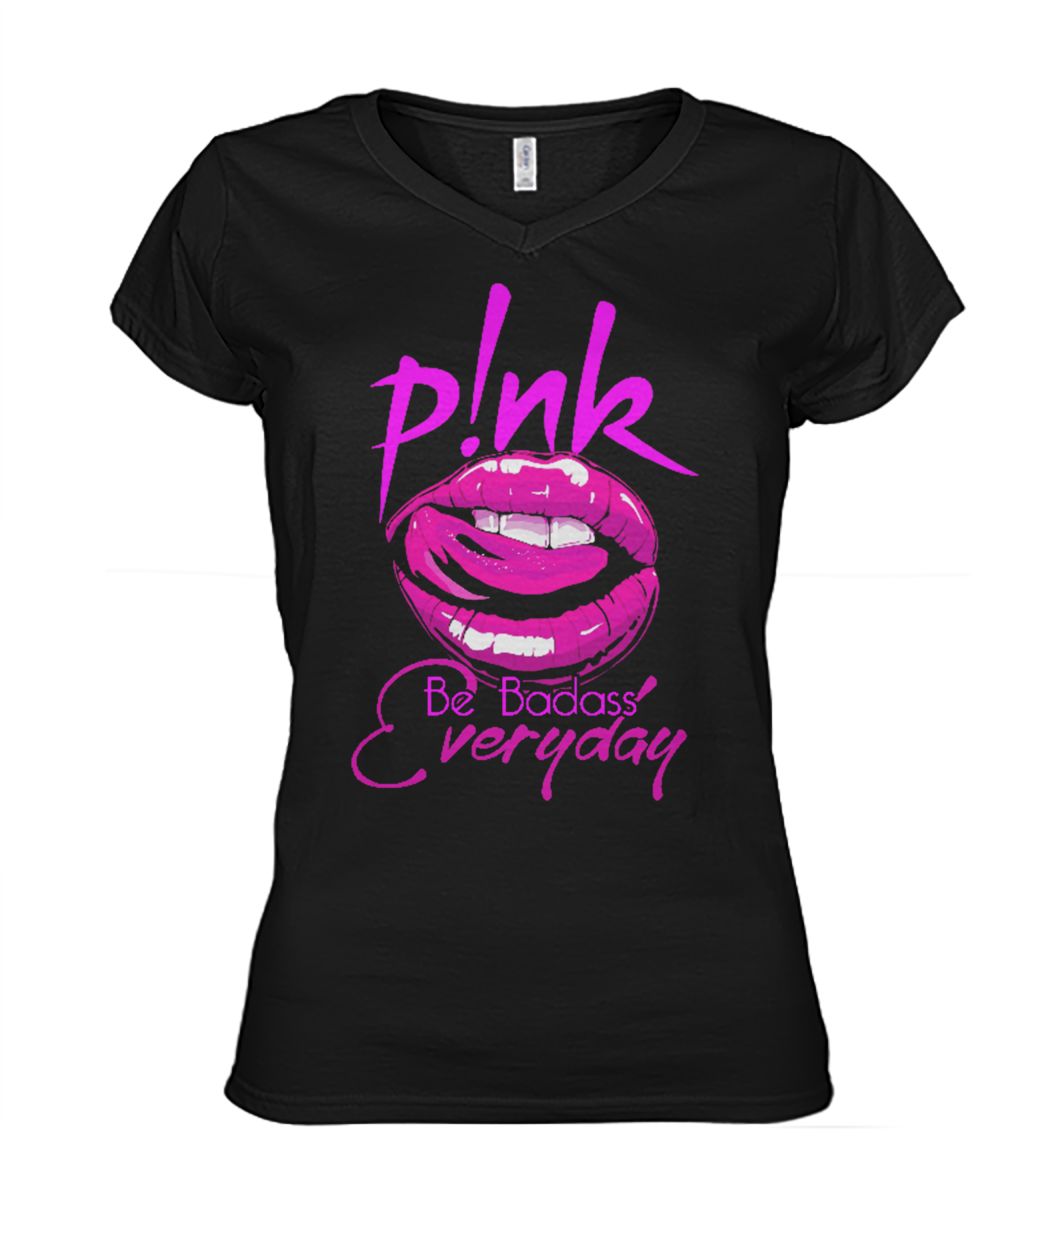 Be badass everyday singer pink women's v-neck